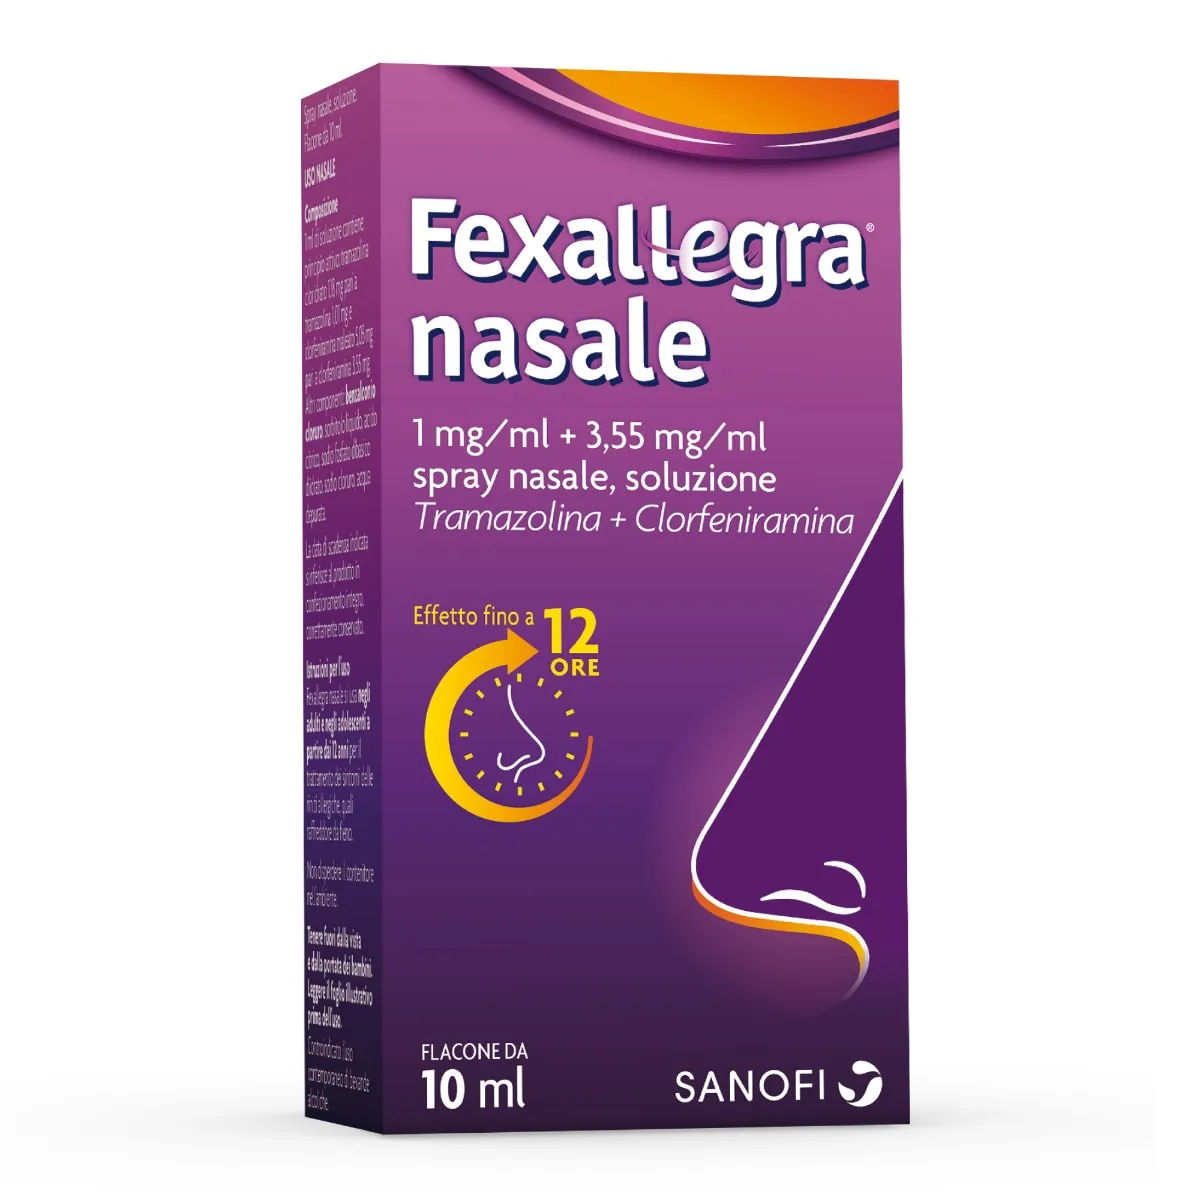 Fexallegra Nasale Spray 10 ml 1 mg/ml + 3,55 mg/ml Rinite Allergica